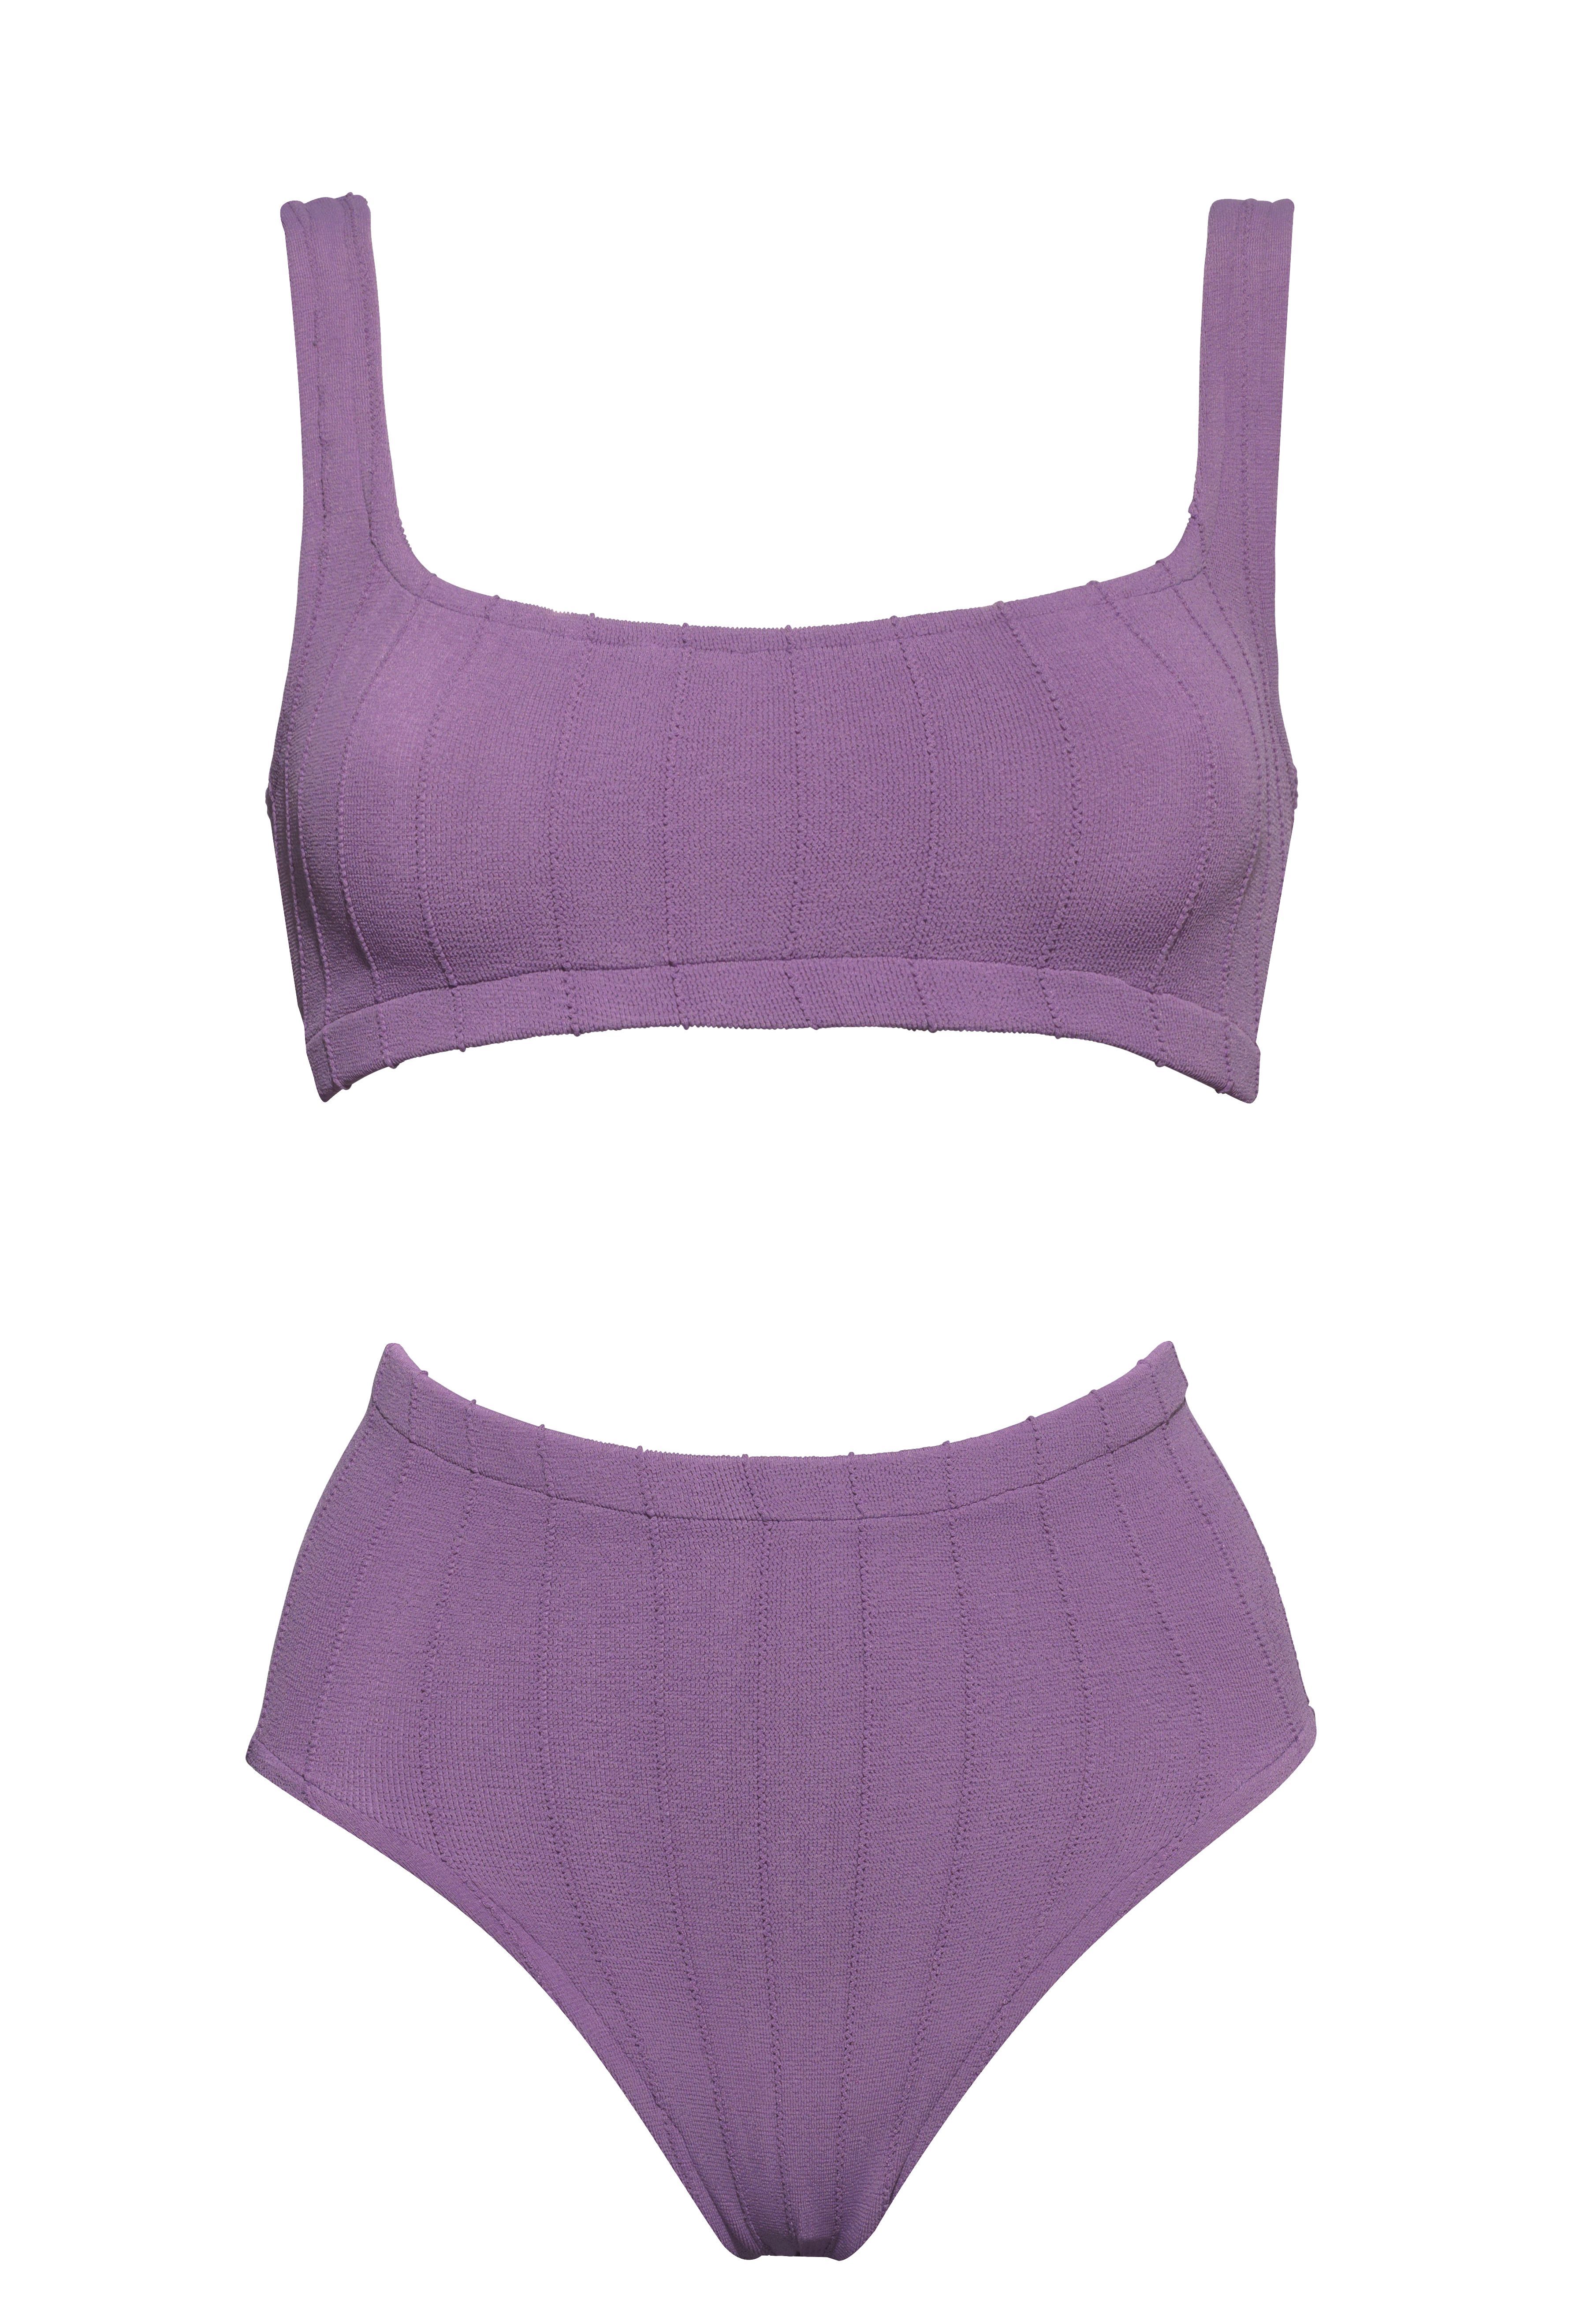 M&S Active Zip Up Bikini Sports Top Swimwear UK Size 12 14 20 NEW TAGS